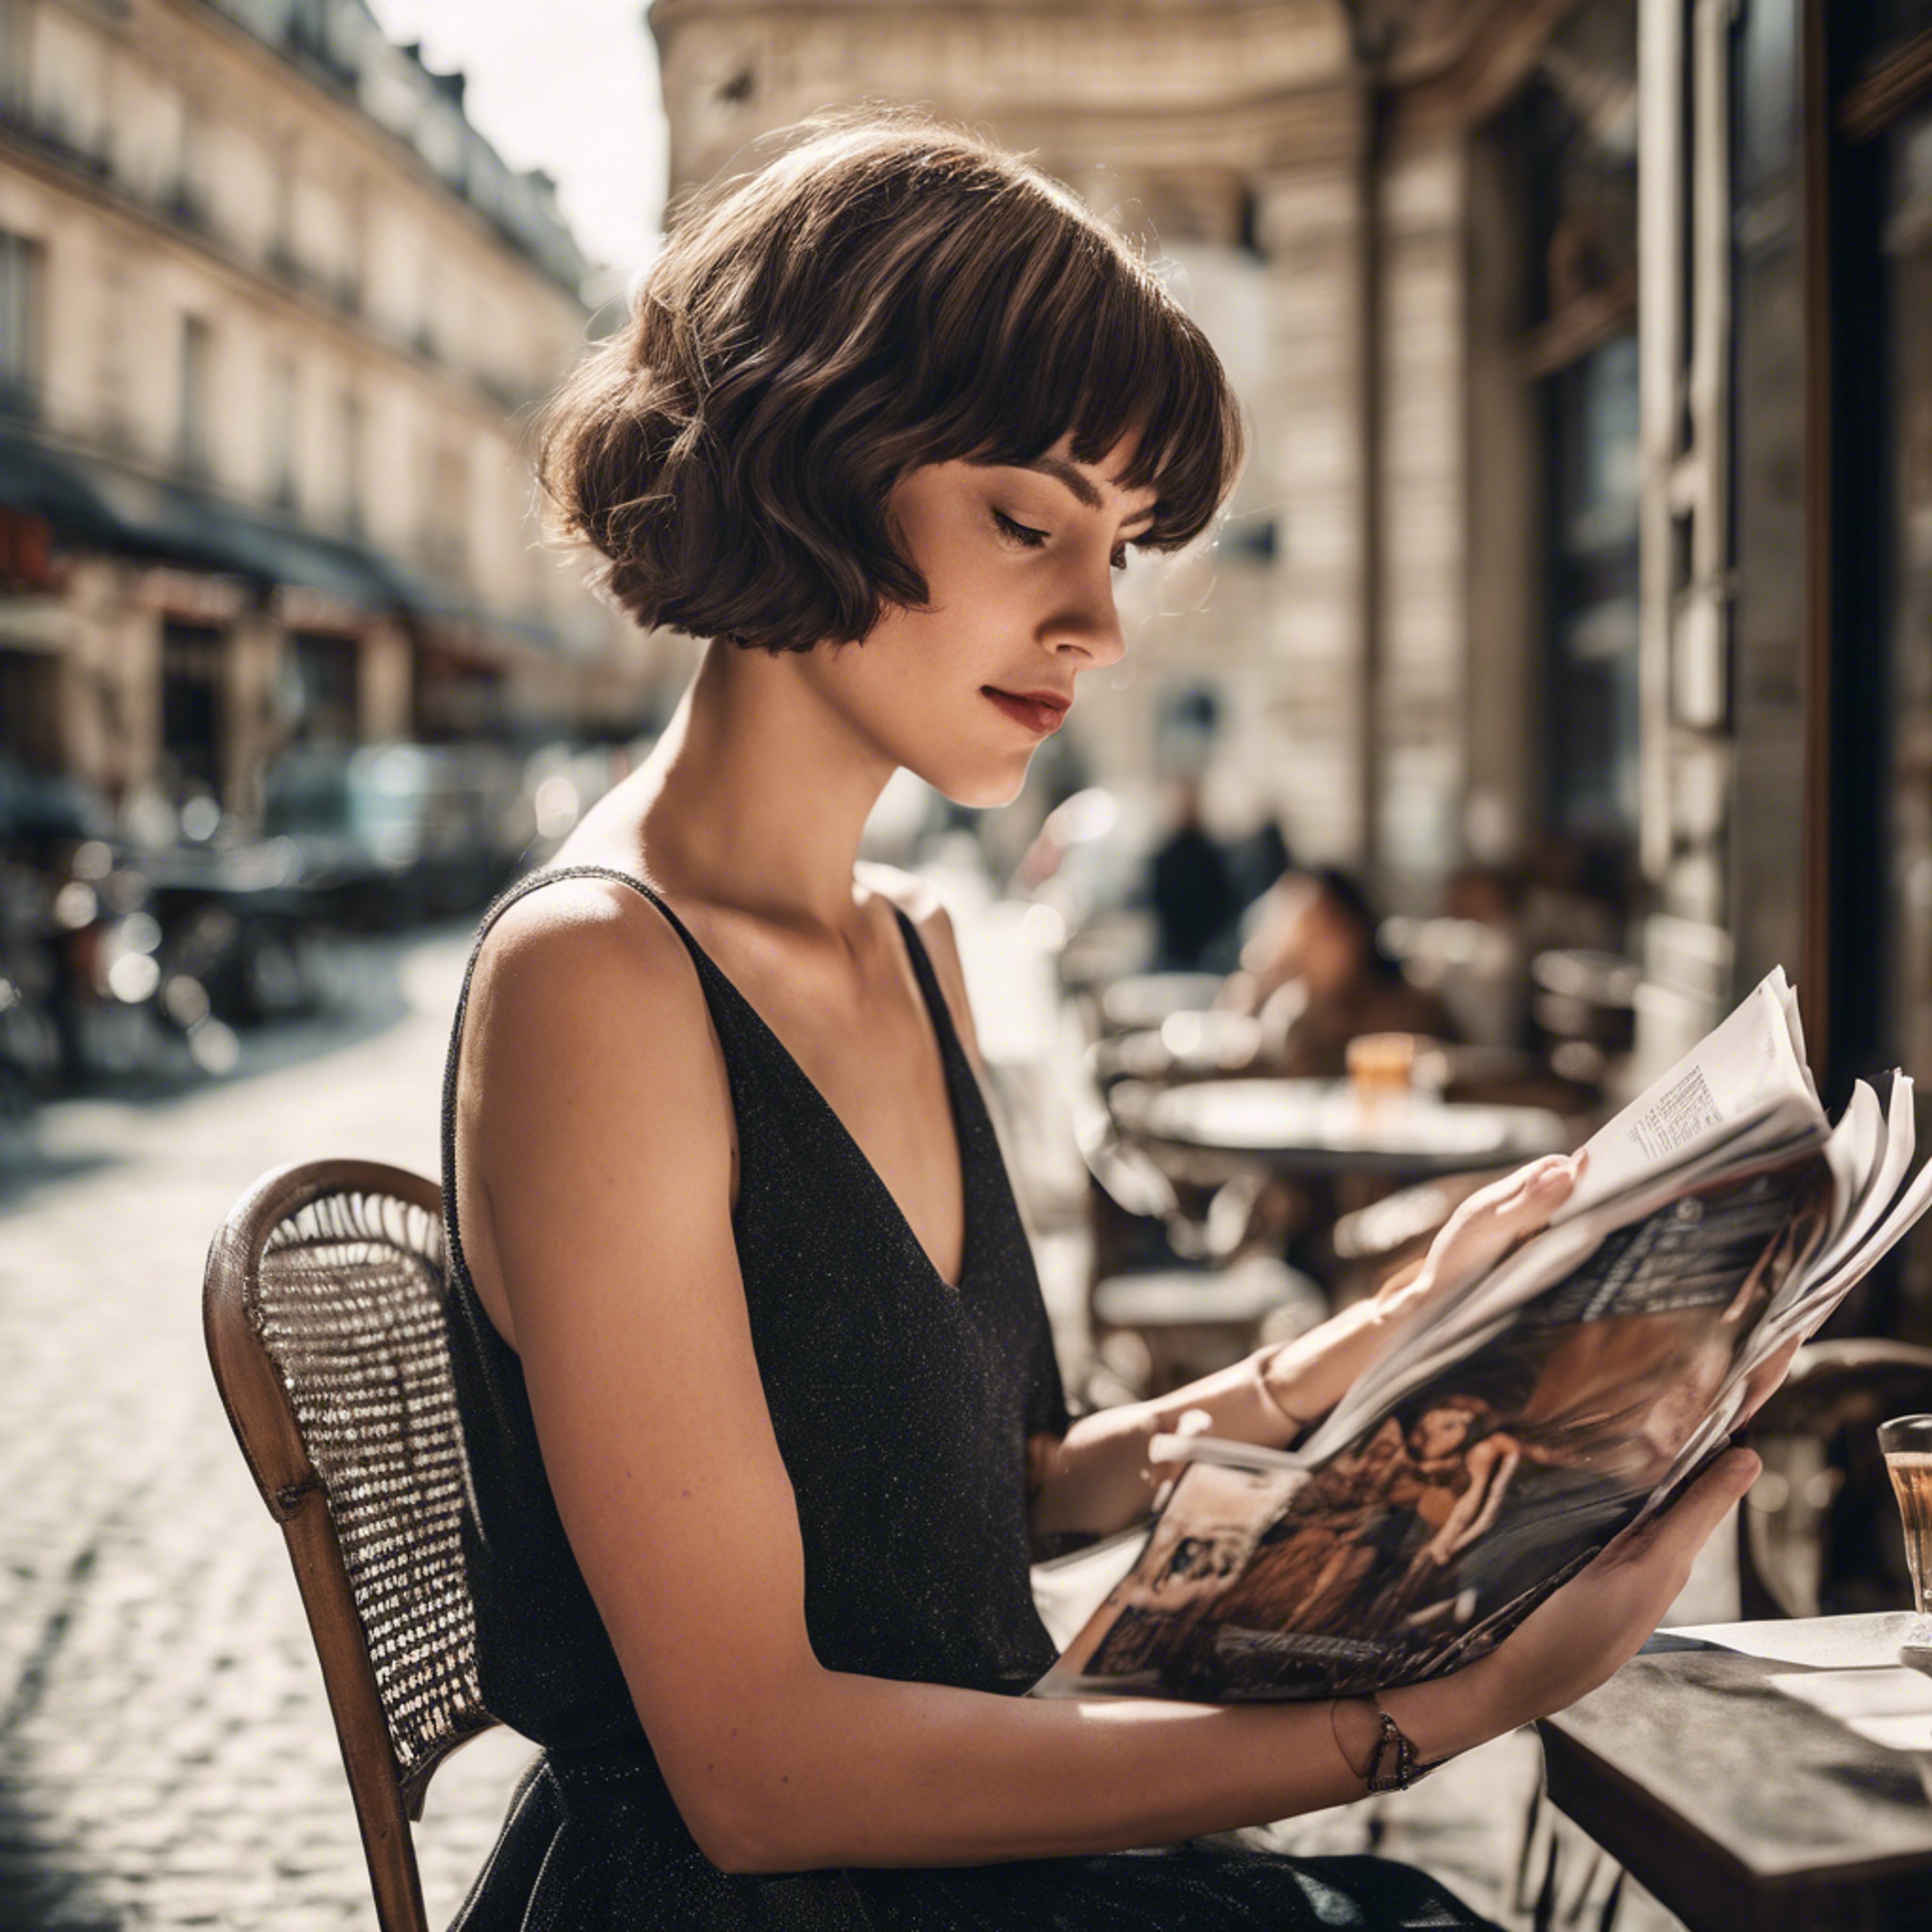 A young woman with a chic French bob haircut reading a fashion magazine at a Parisian café. Tapeta[b1696e20e31b4962ac1f]